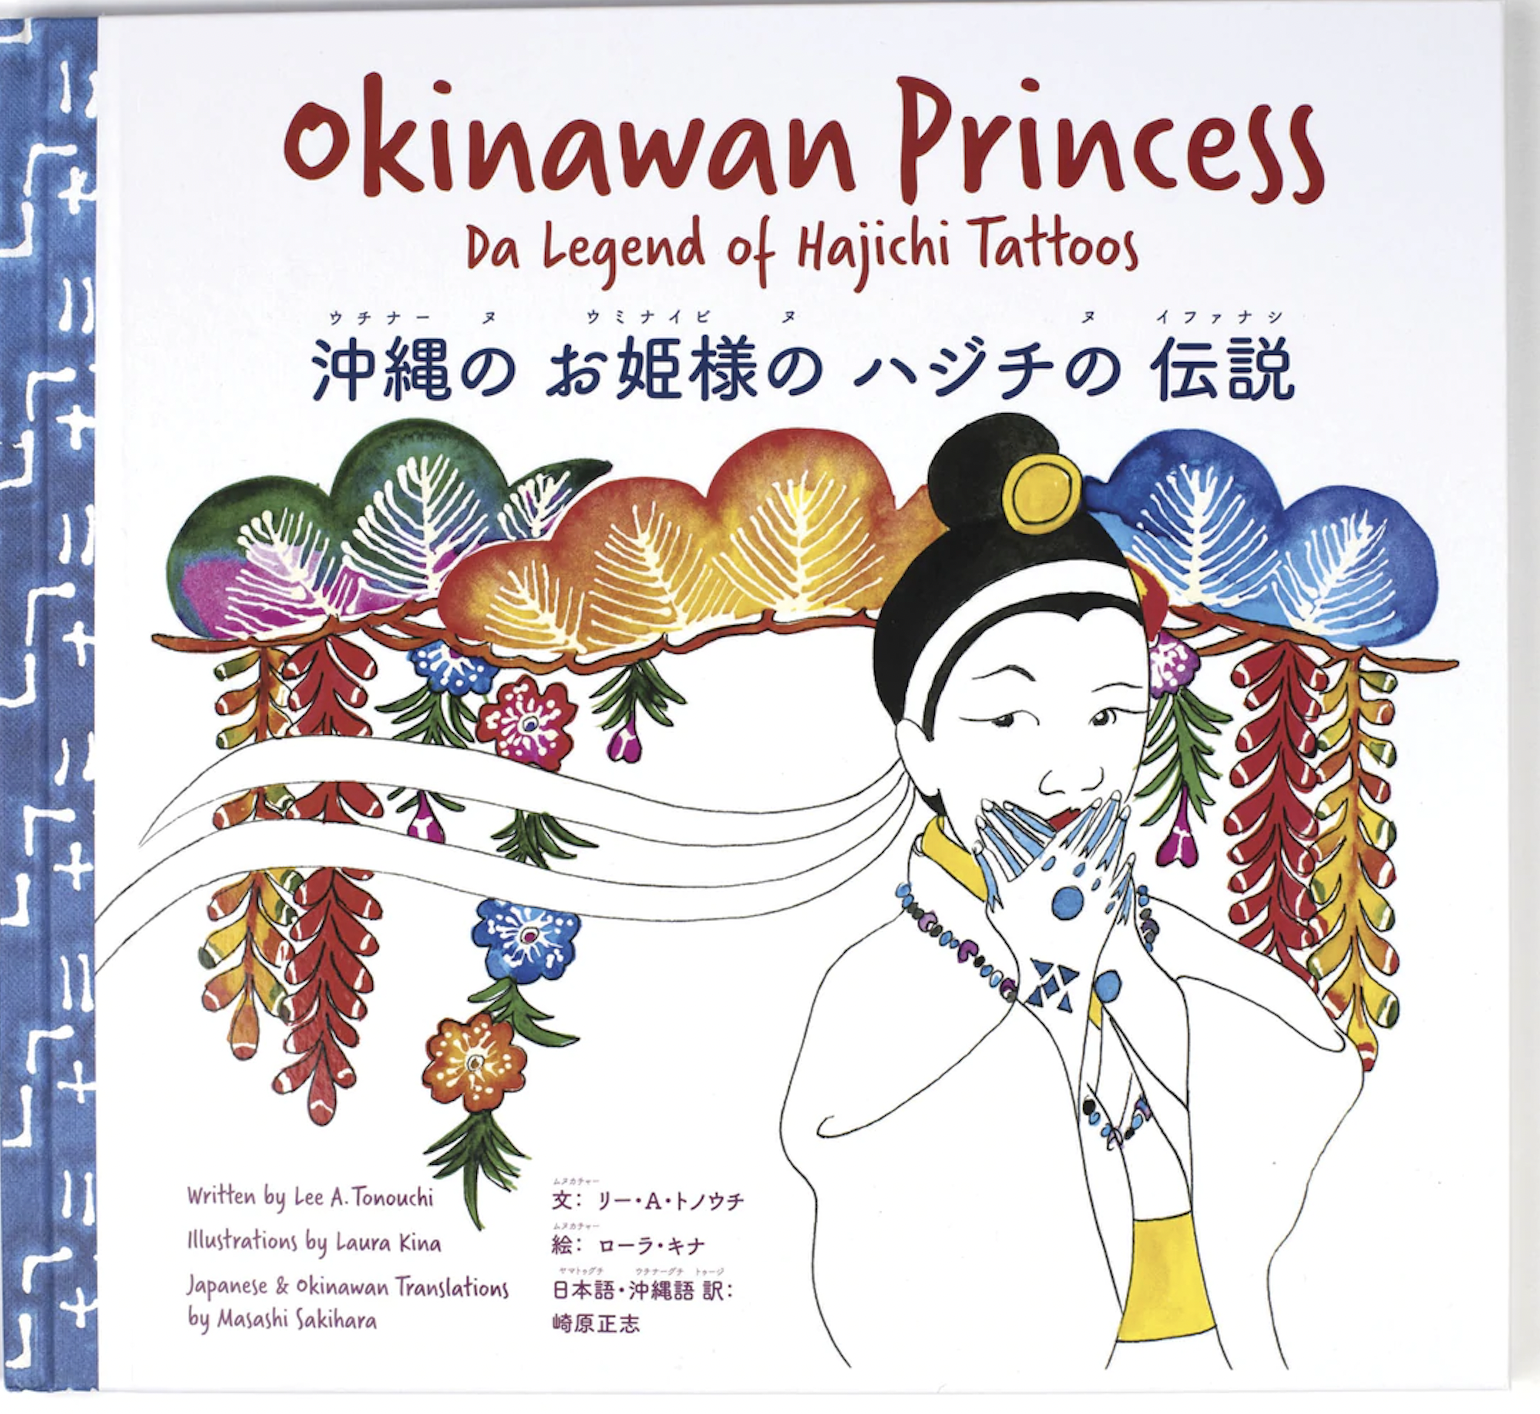 Okinawan Princess: Da Legend of Hajichi Tattoos (Pidgin, Japanese and Okinawan Edition)